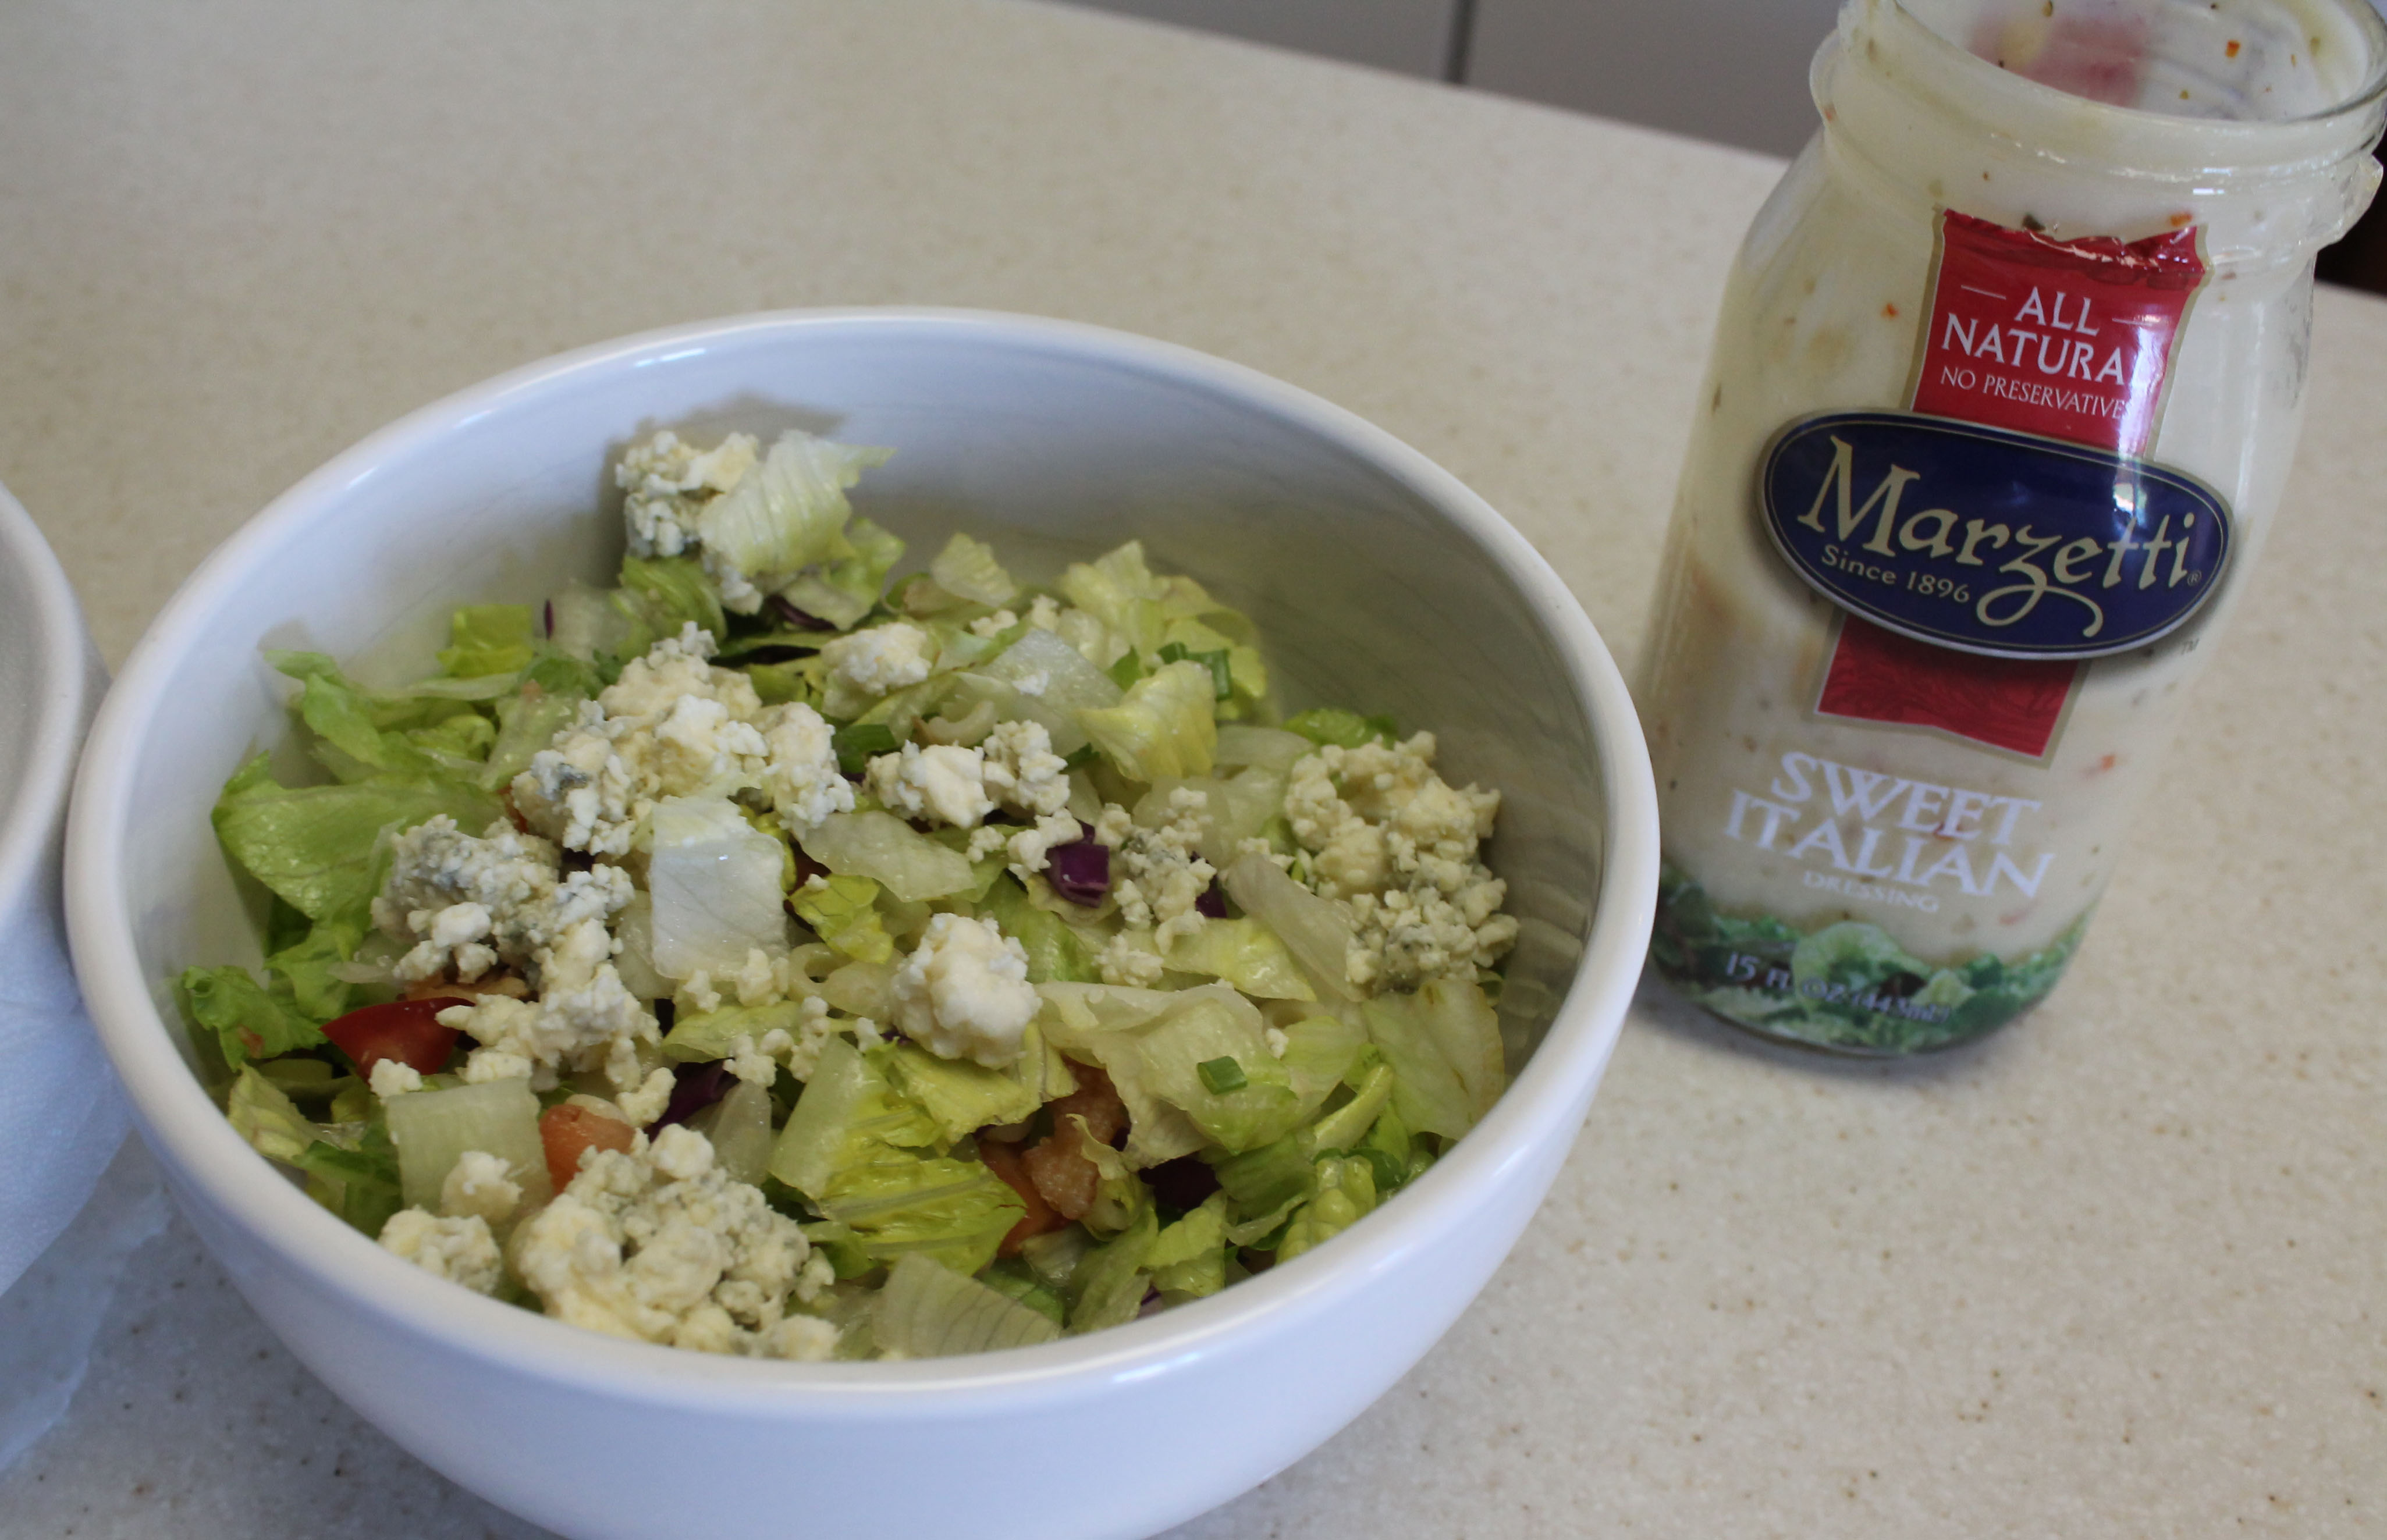 Copycat Portillo’s Chopped Salad – Amazing! August 17, 2012